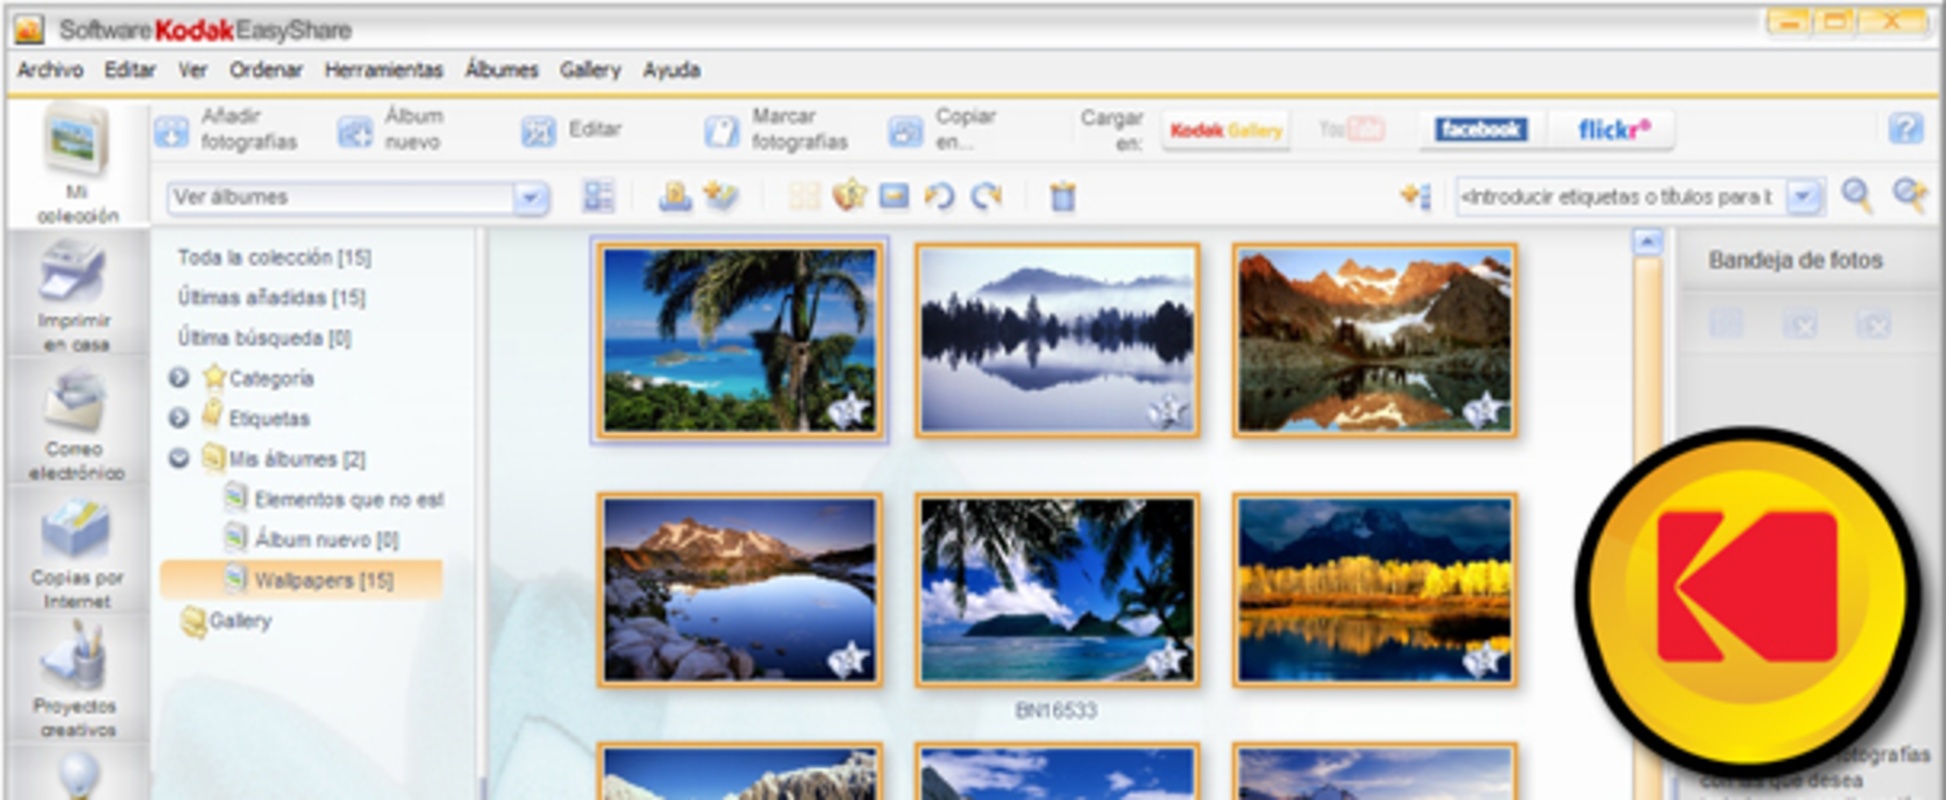 Kodak EasyShare 8.2 for Windows Screenshot 1